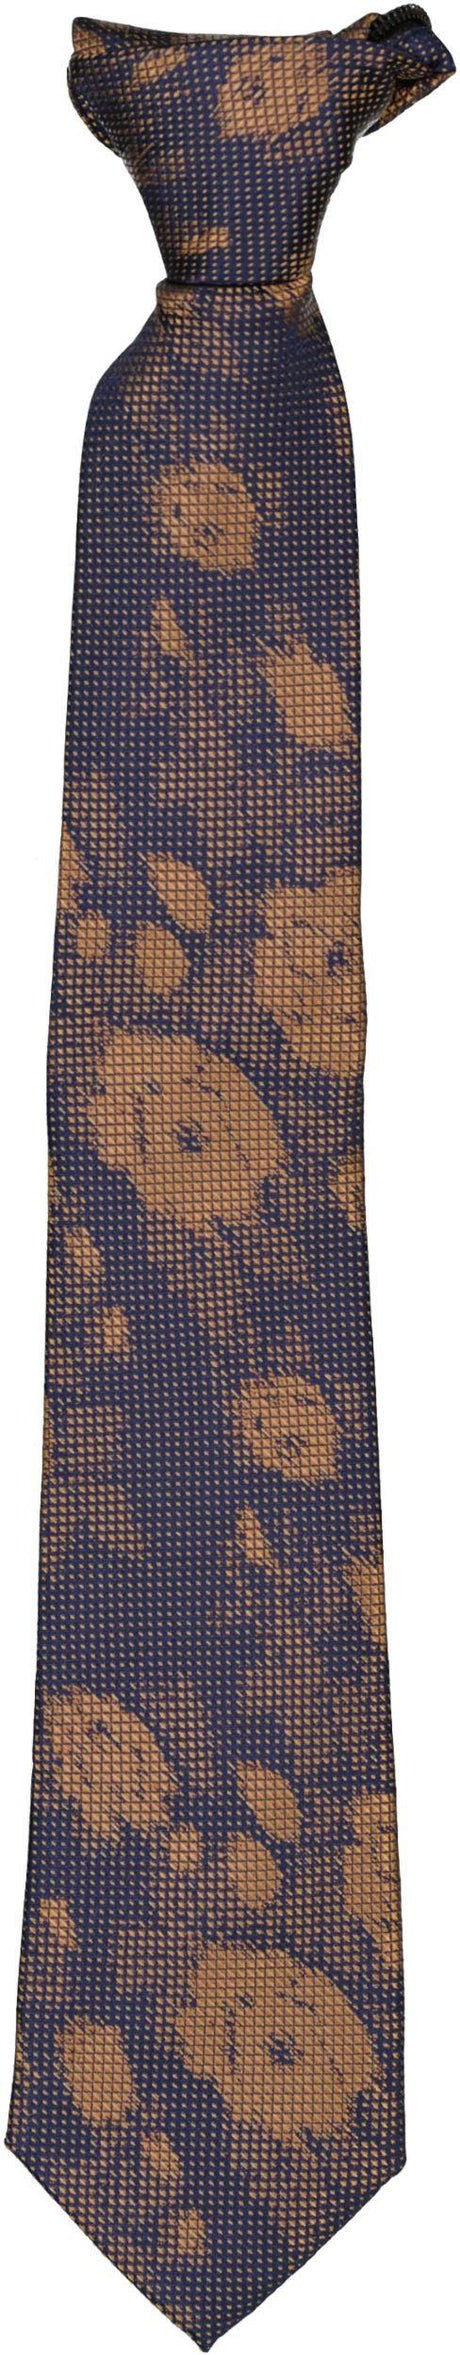 T.O. Collection Boys Necktie - TO254